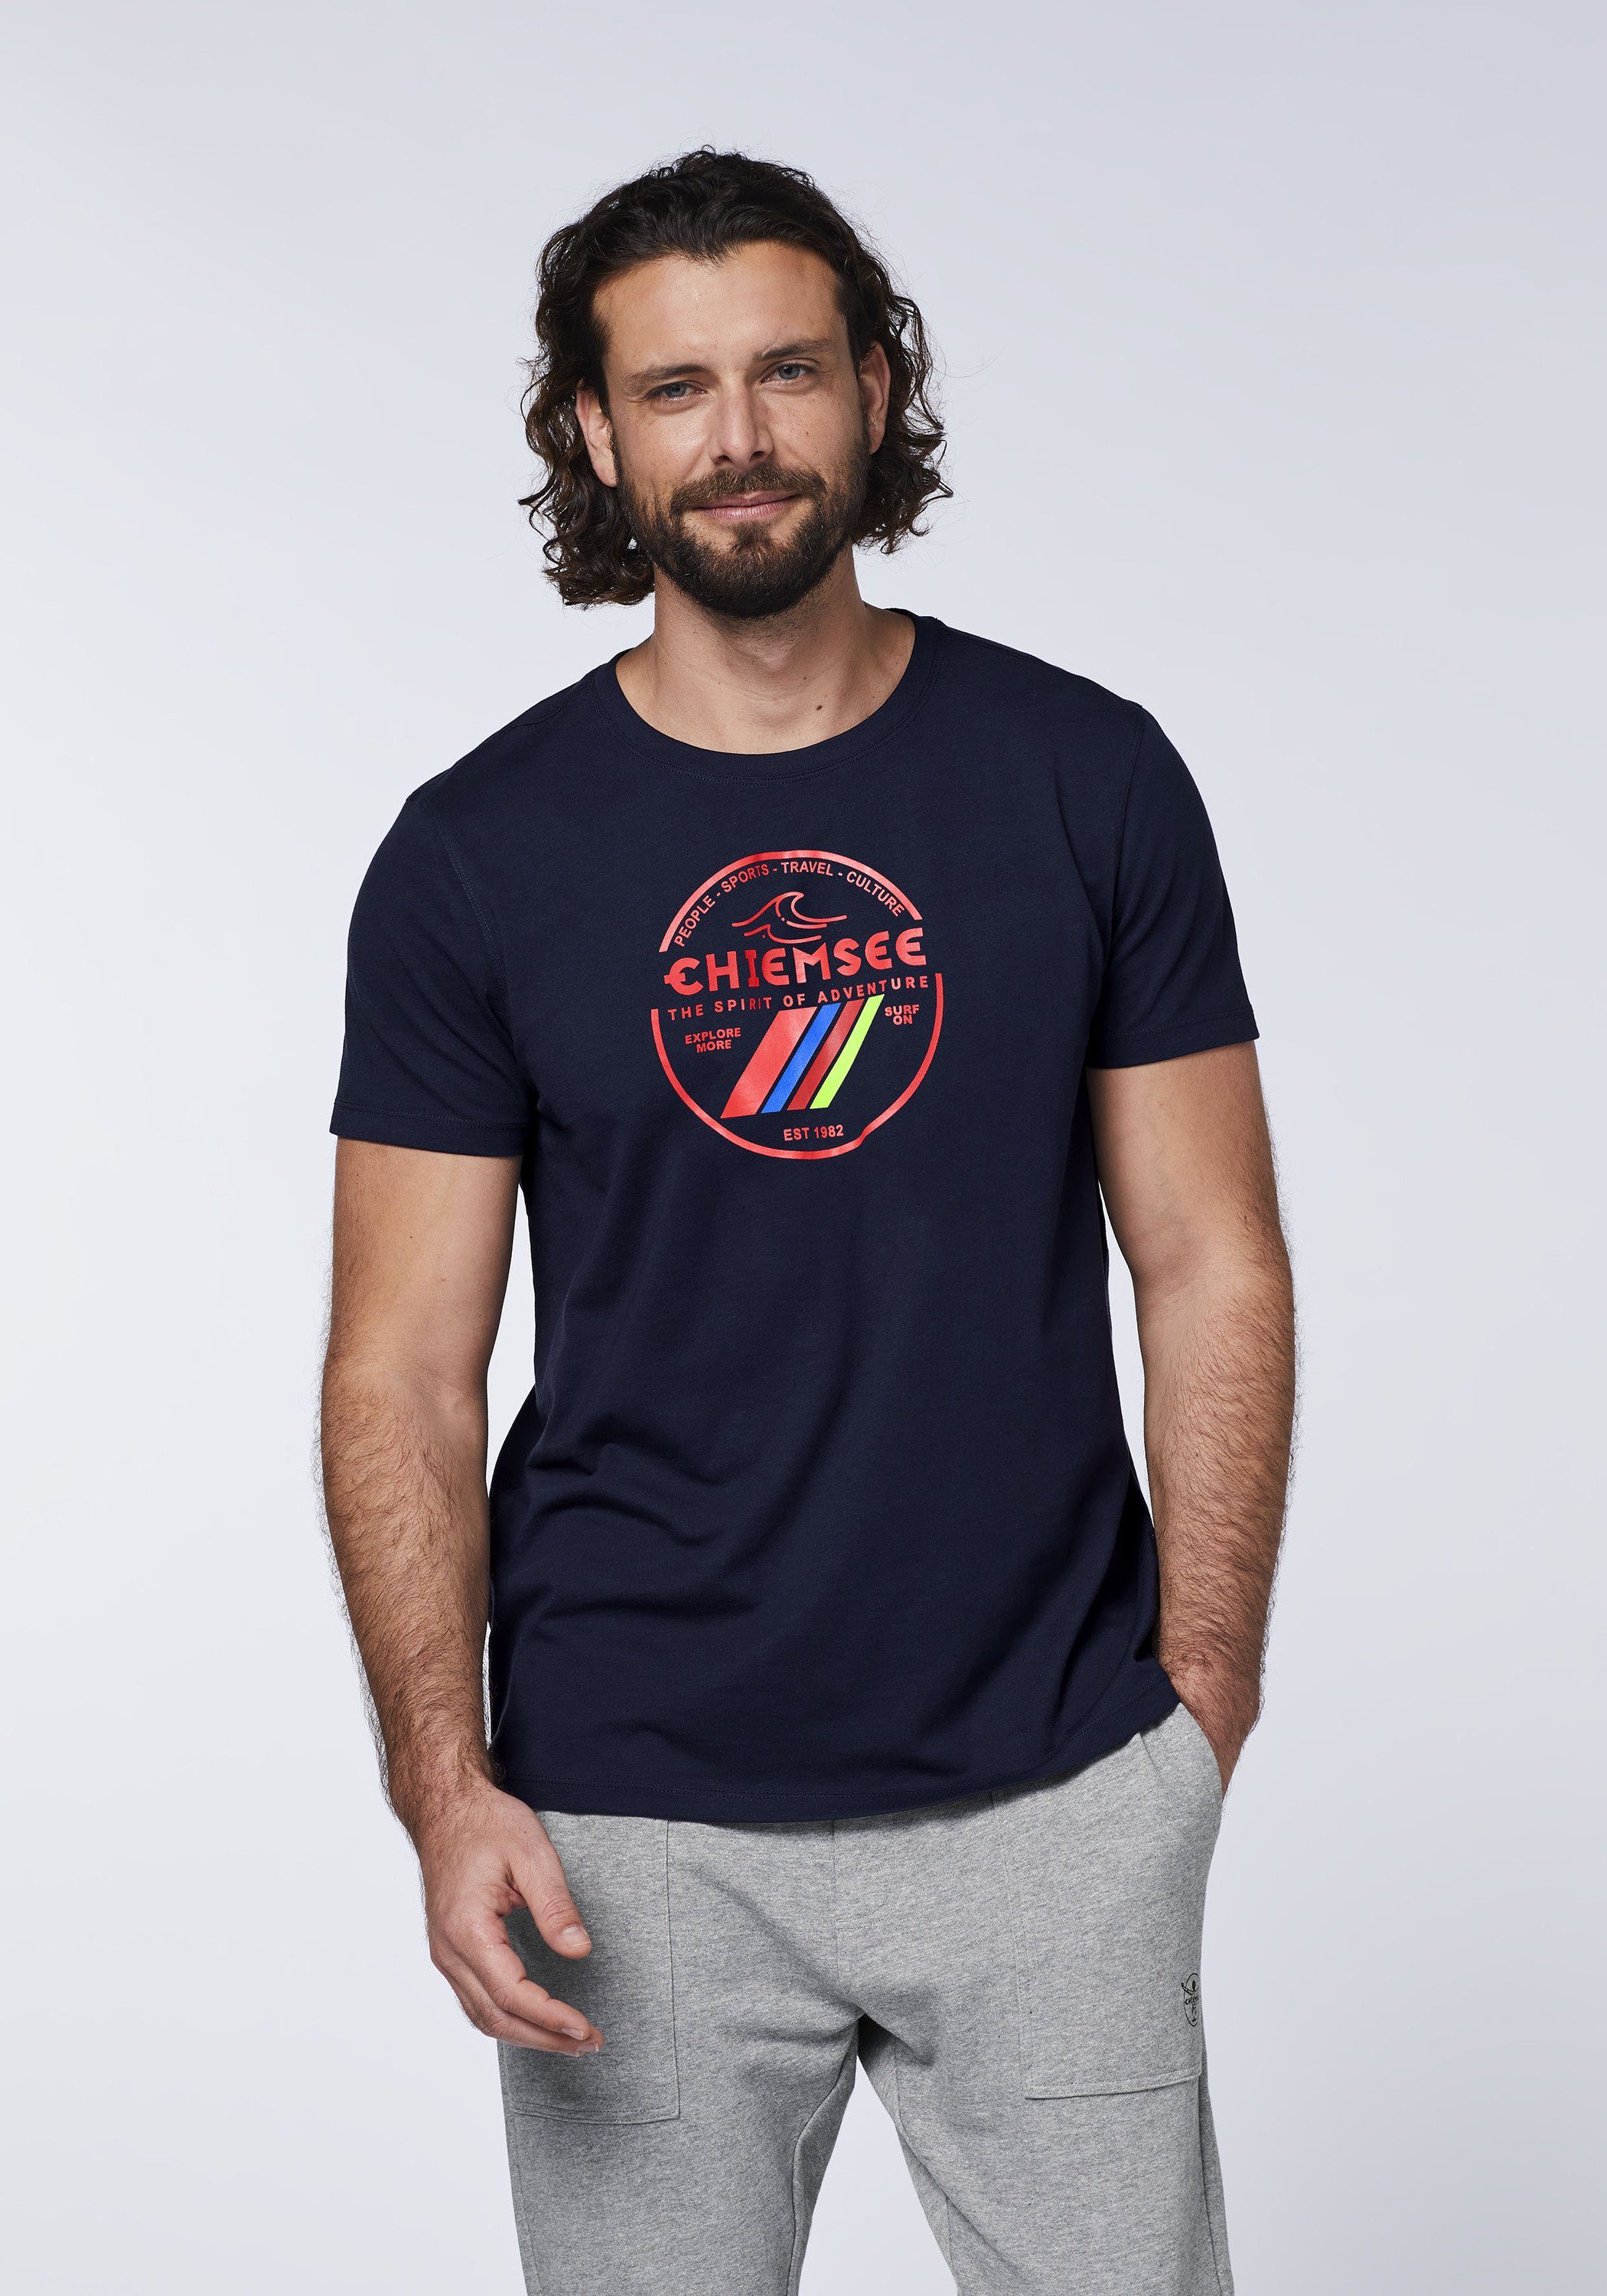 19-3924 T-Shirt Label-Frontprint Baumwolle Night Chiemsee 1 Sky Print-Shirt mit aus